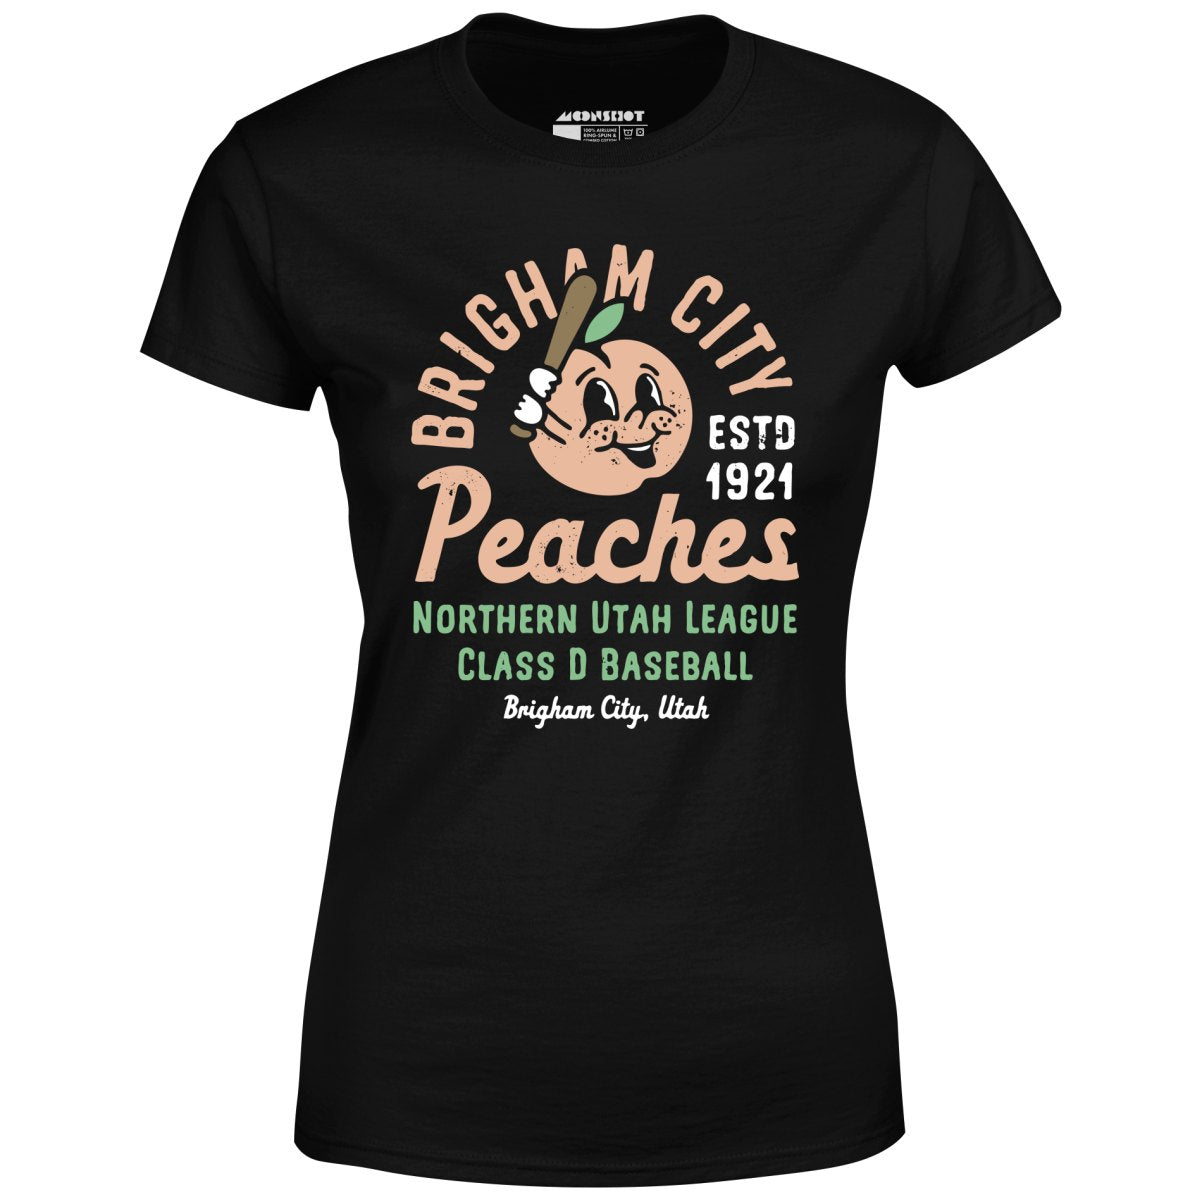 Brigham City Peaches - Utah - Vintage Defunct Baseball Teams - Women's T-Shirt